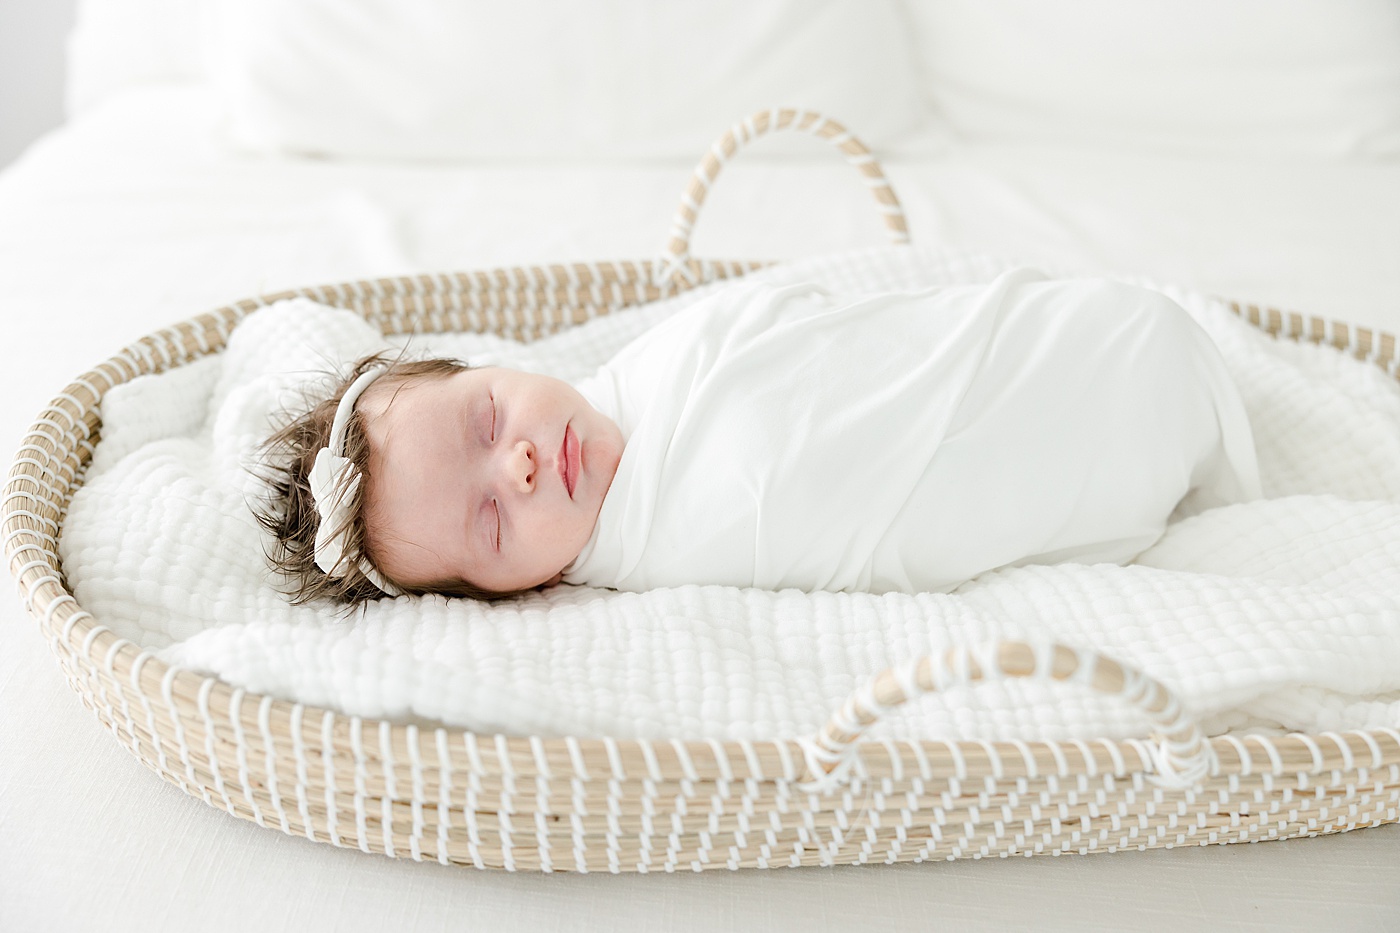 Studio newborn photos in Westport, CT | Kristin Wood Photography